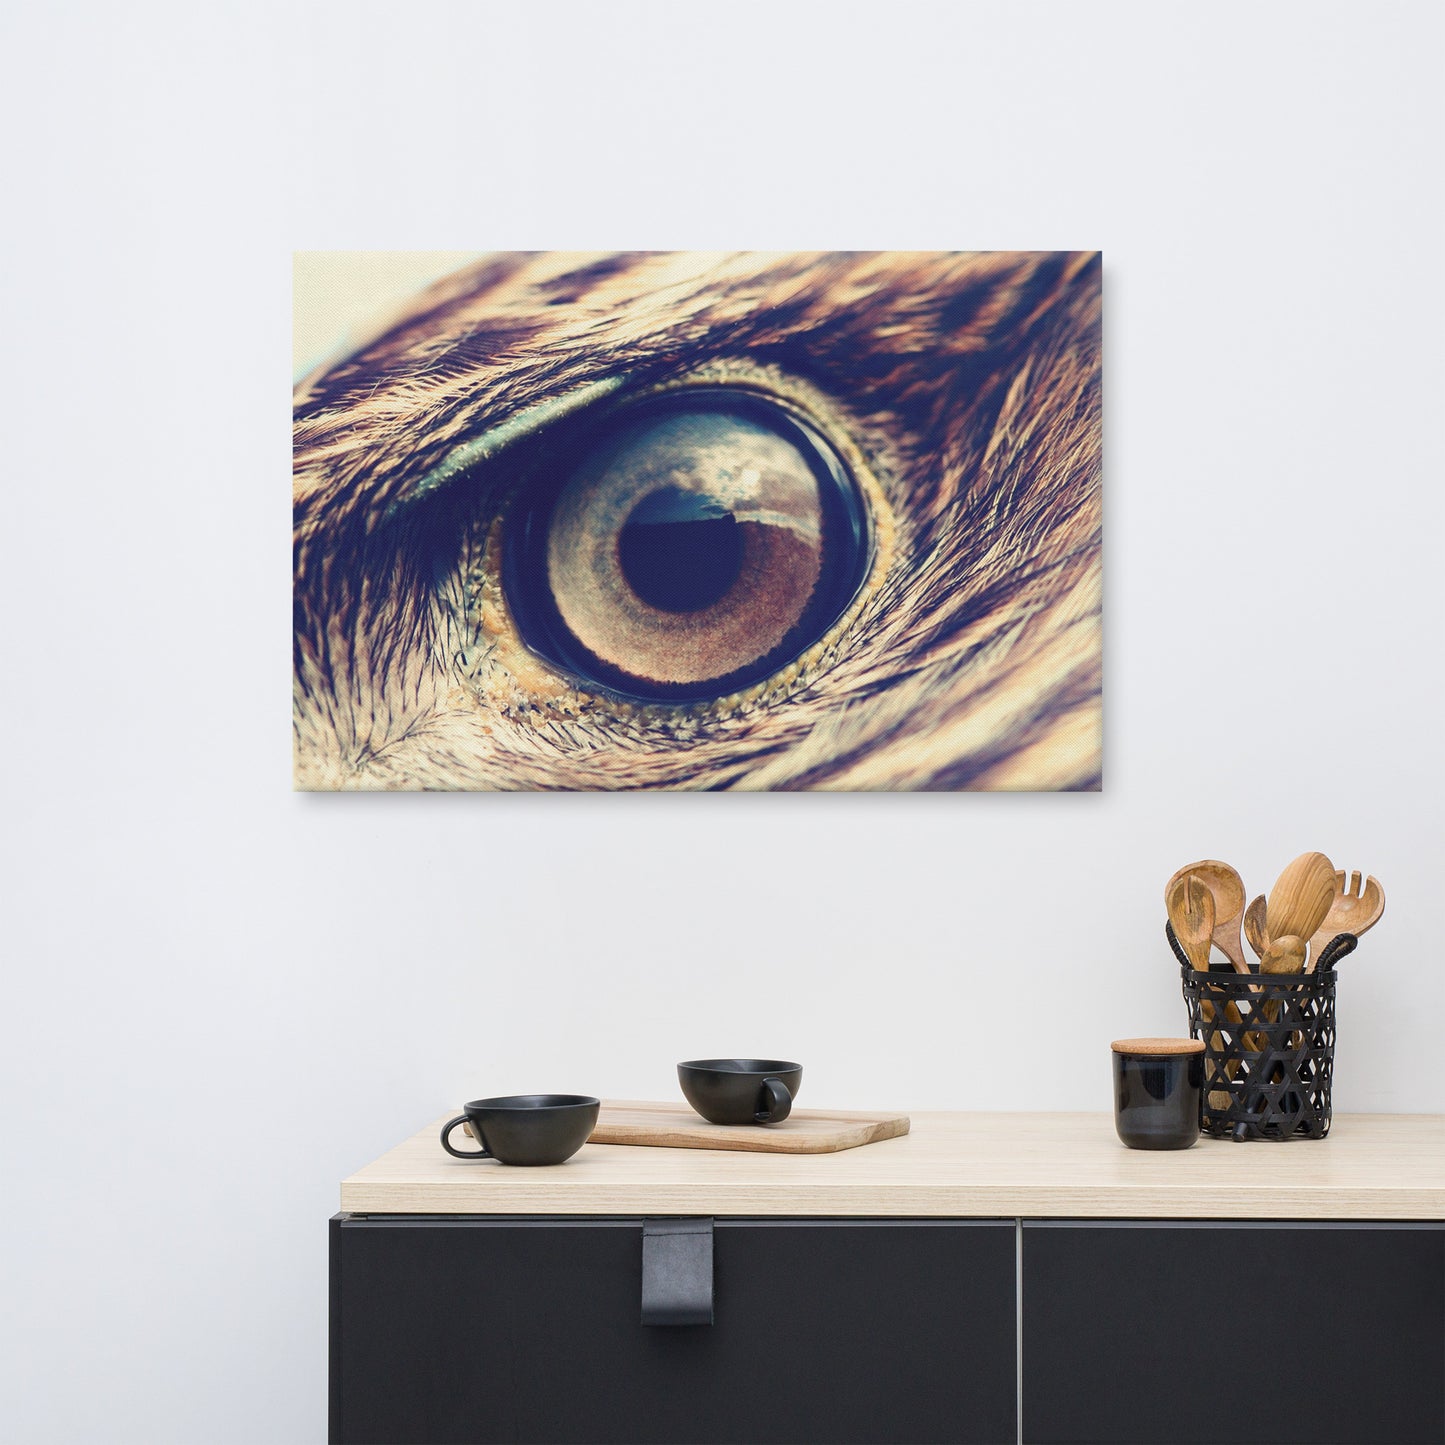 Close-up Eagle Eye Color Tone Animal Wildlife Photograph Canvas Wall Art Prints